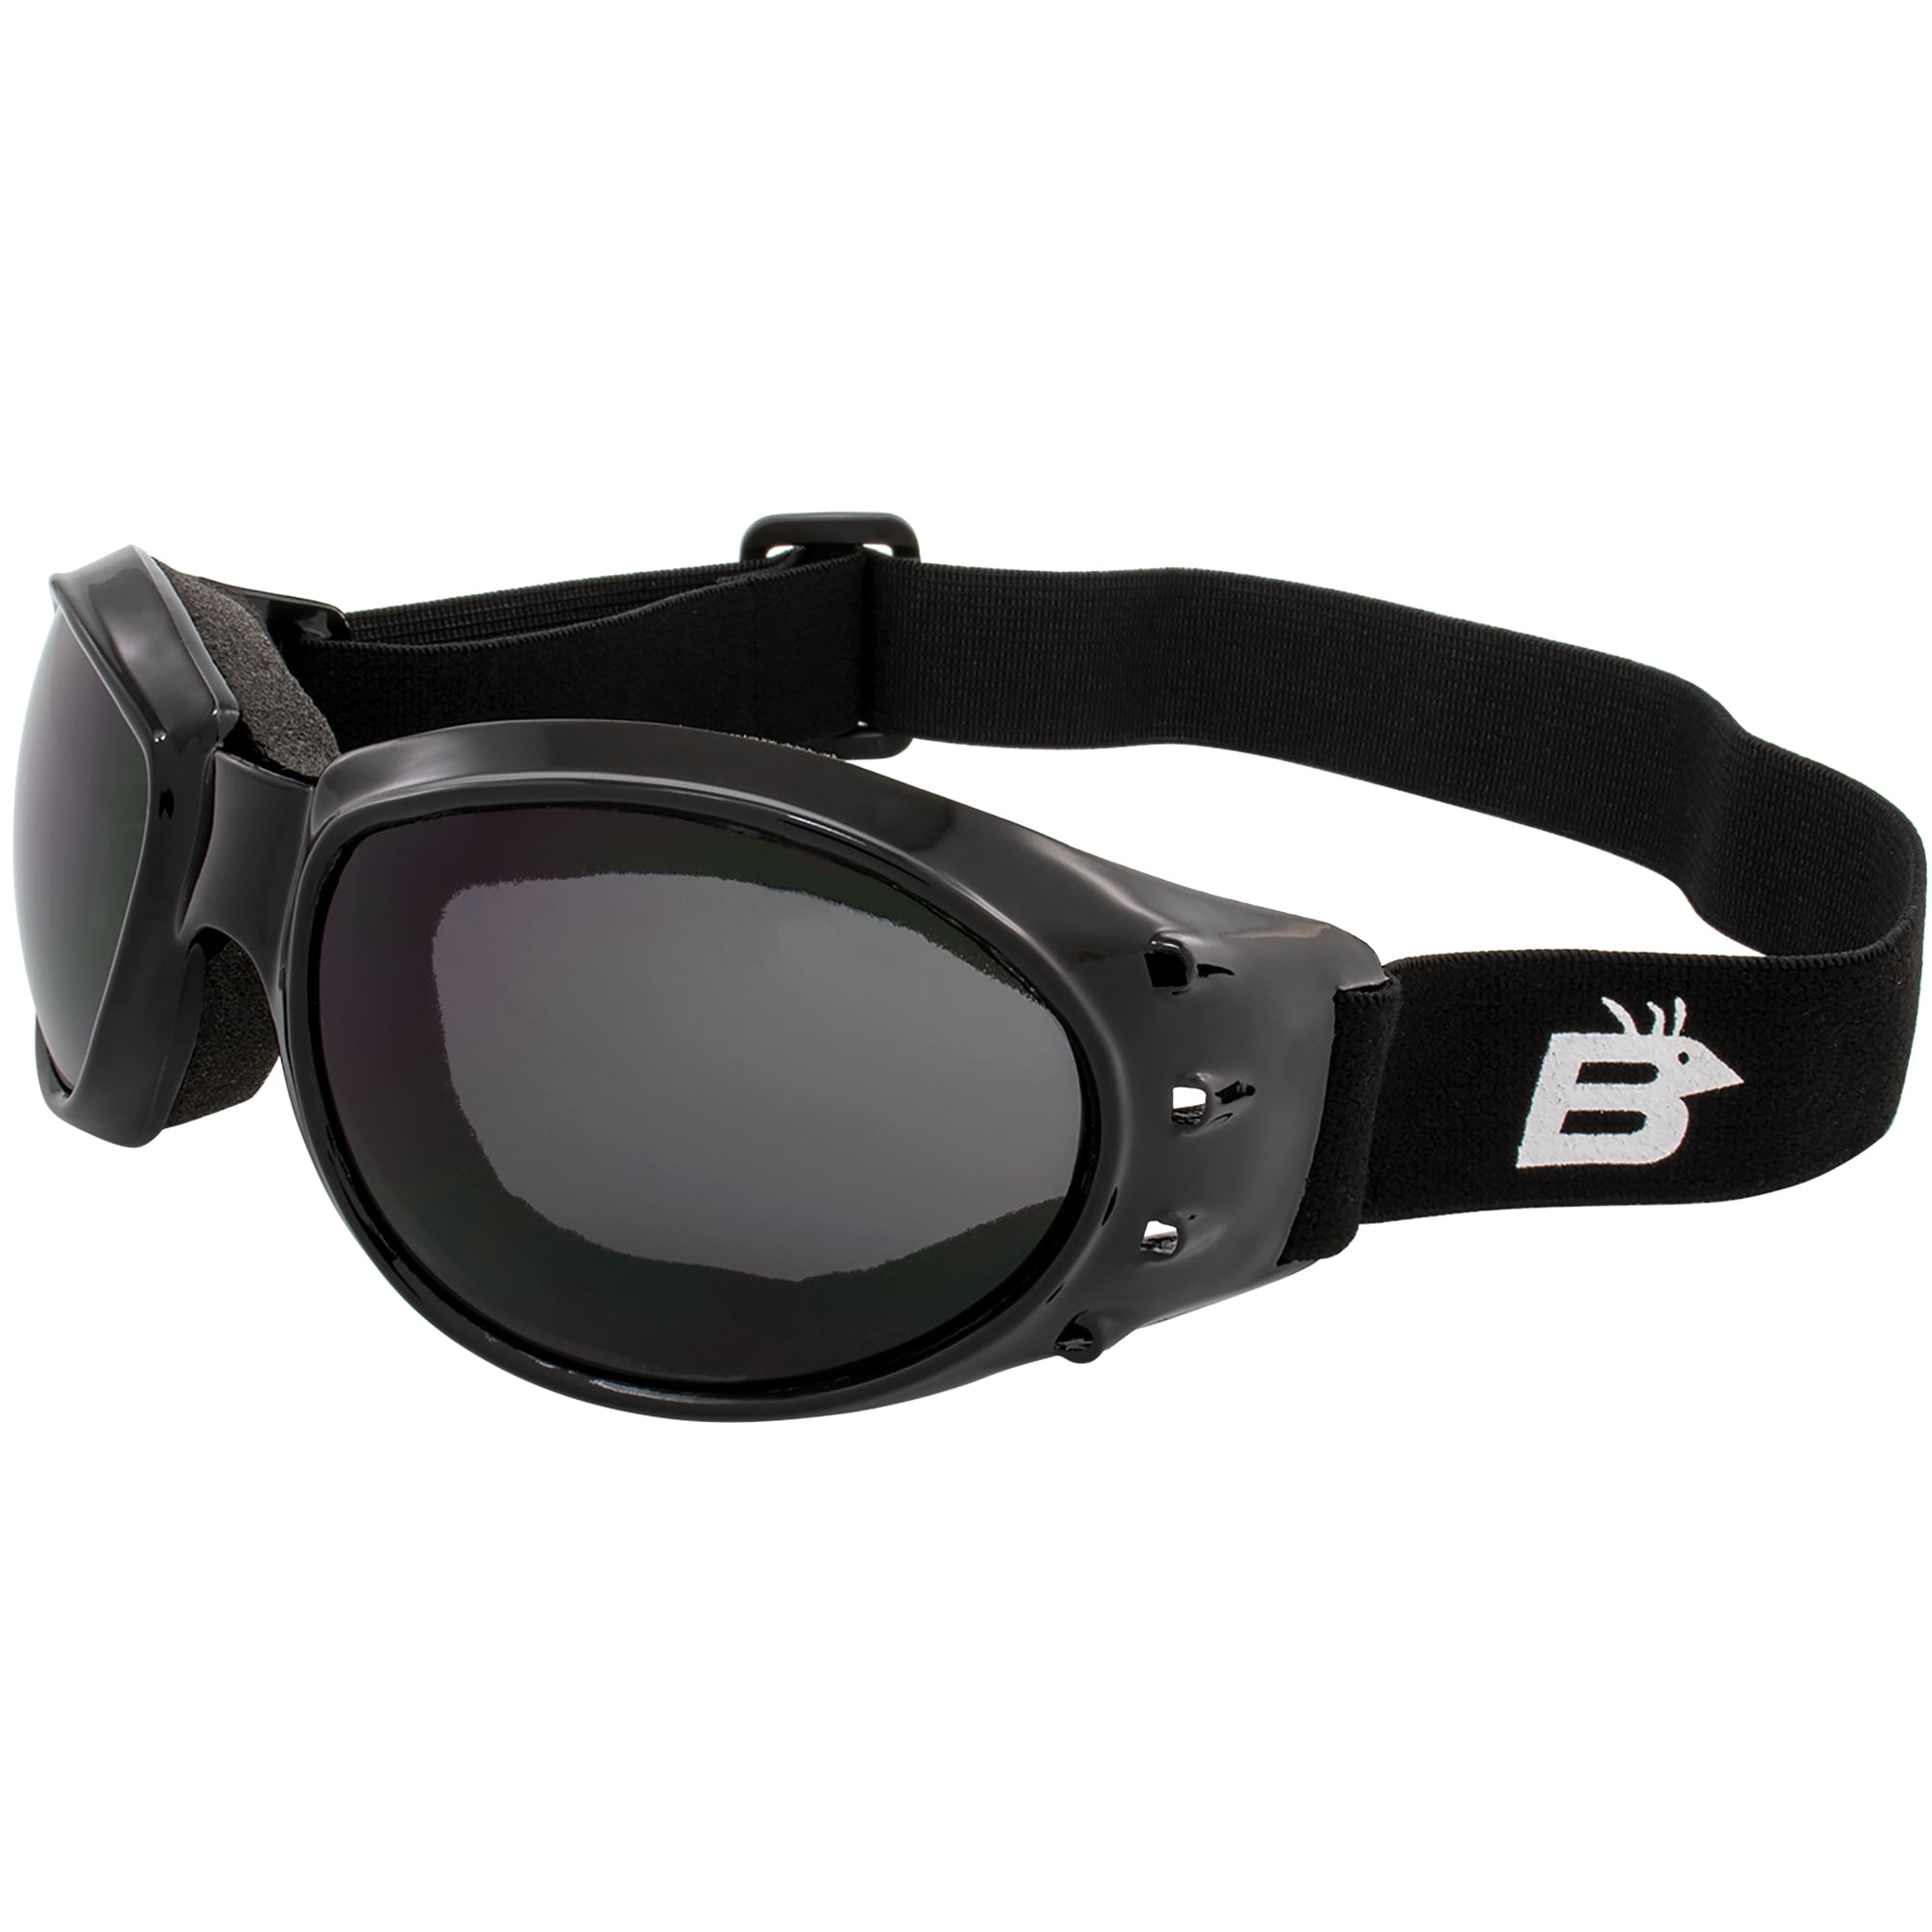 Birdz Eyewear Vulture Over The Glasses Fit Over Most Eyeglasses Smoke Lens Goggles OTG